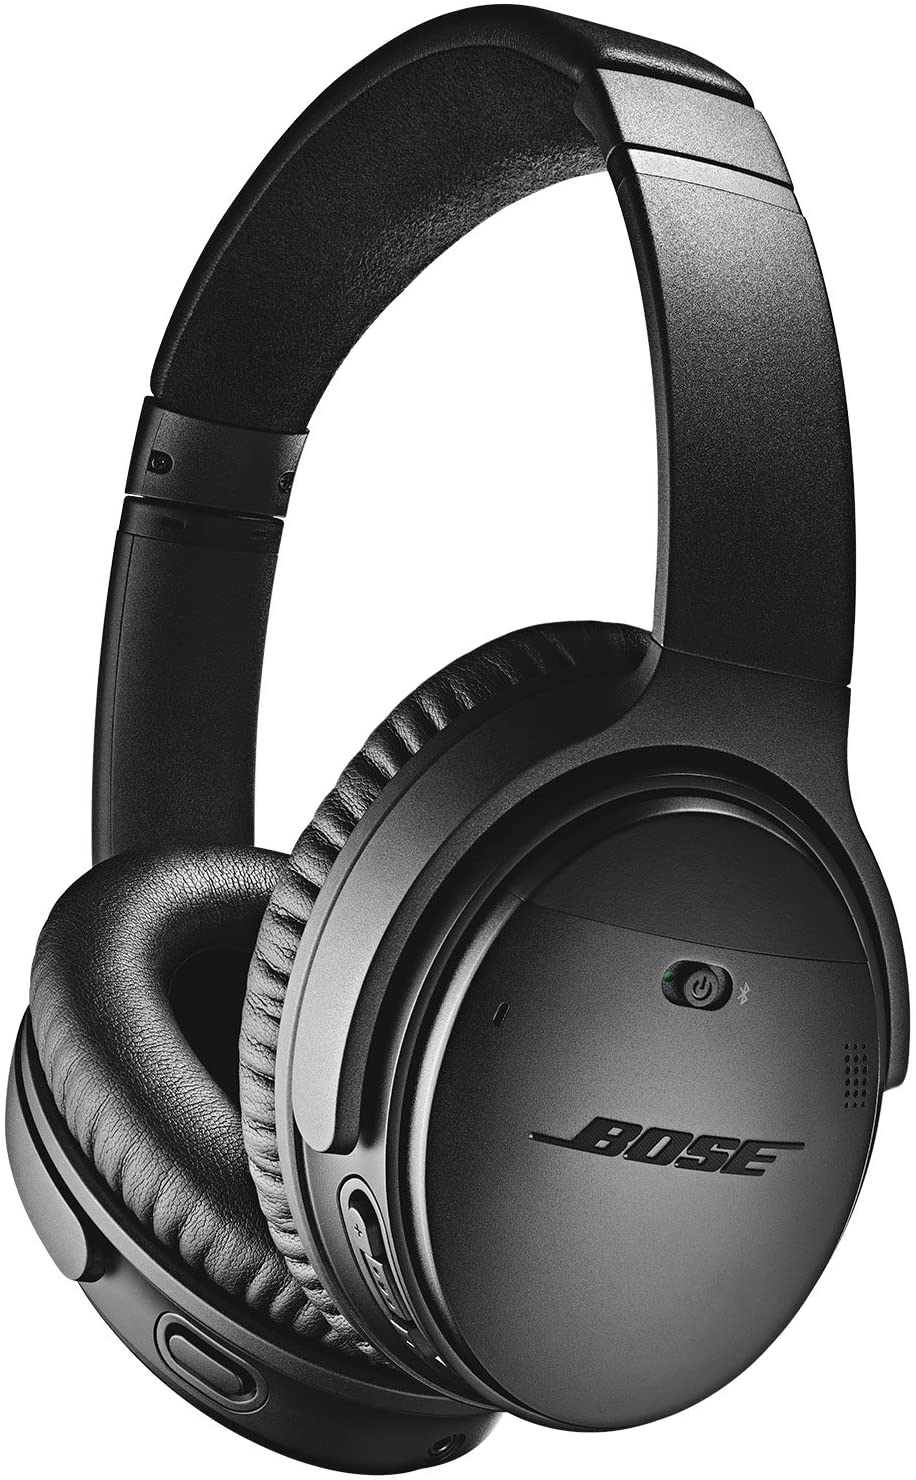 Bose QuietComfort 35 II Wireless Noise Cancelling Headphones $180 + free s/h at Amazon